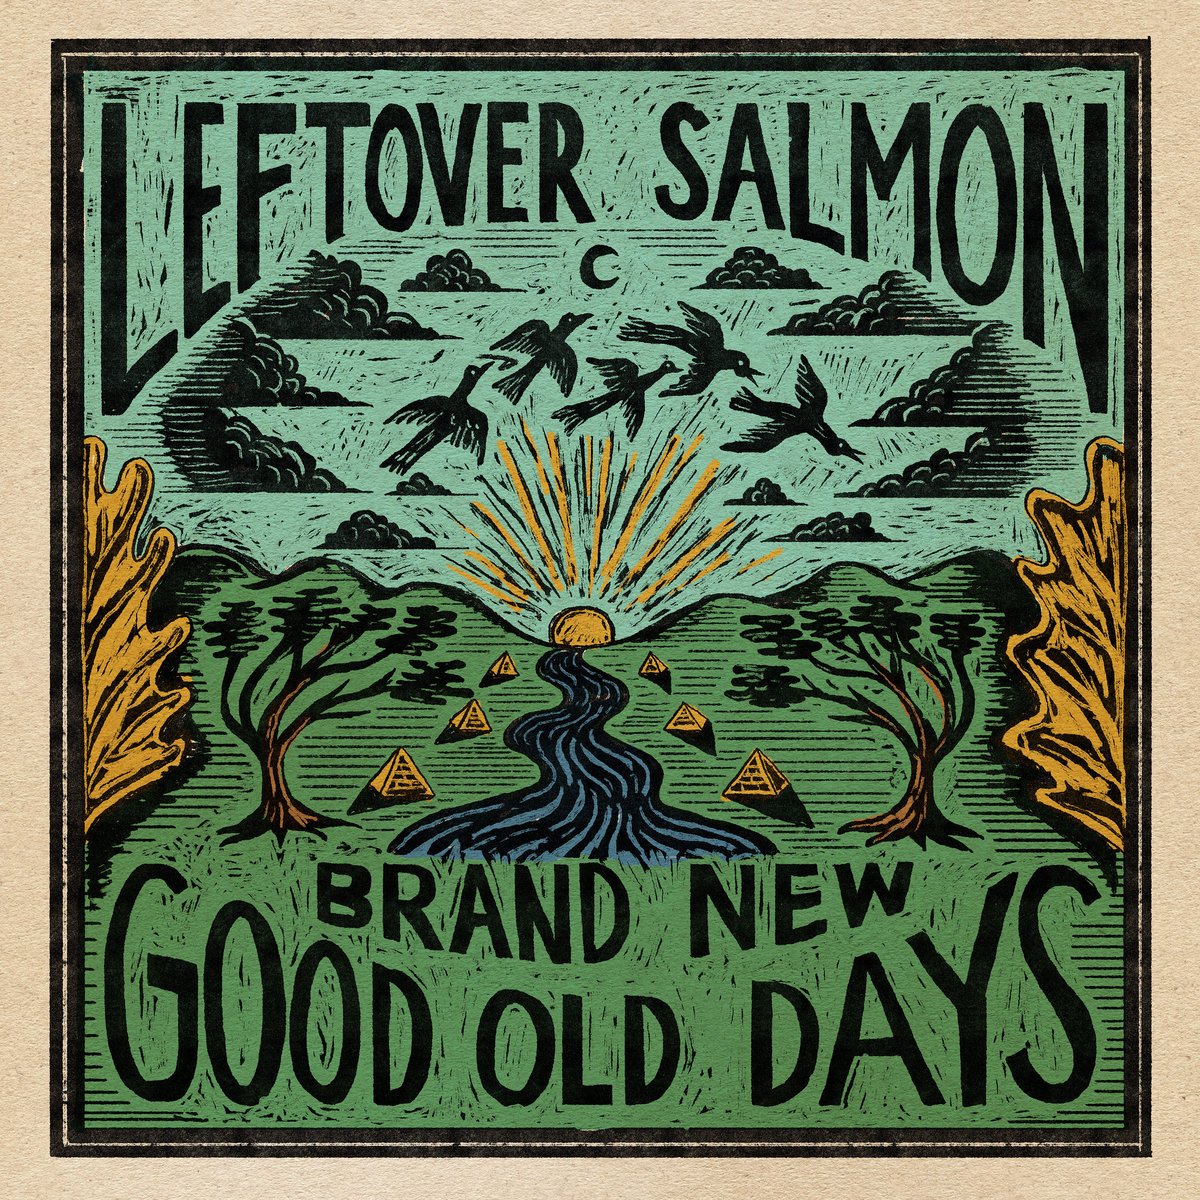 leftover salmon - brand new good old days.jpeg